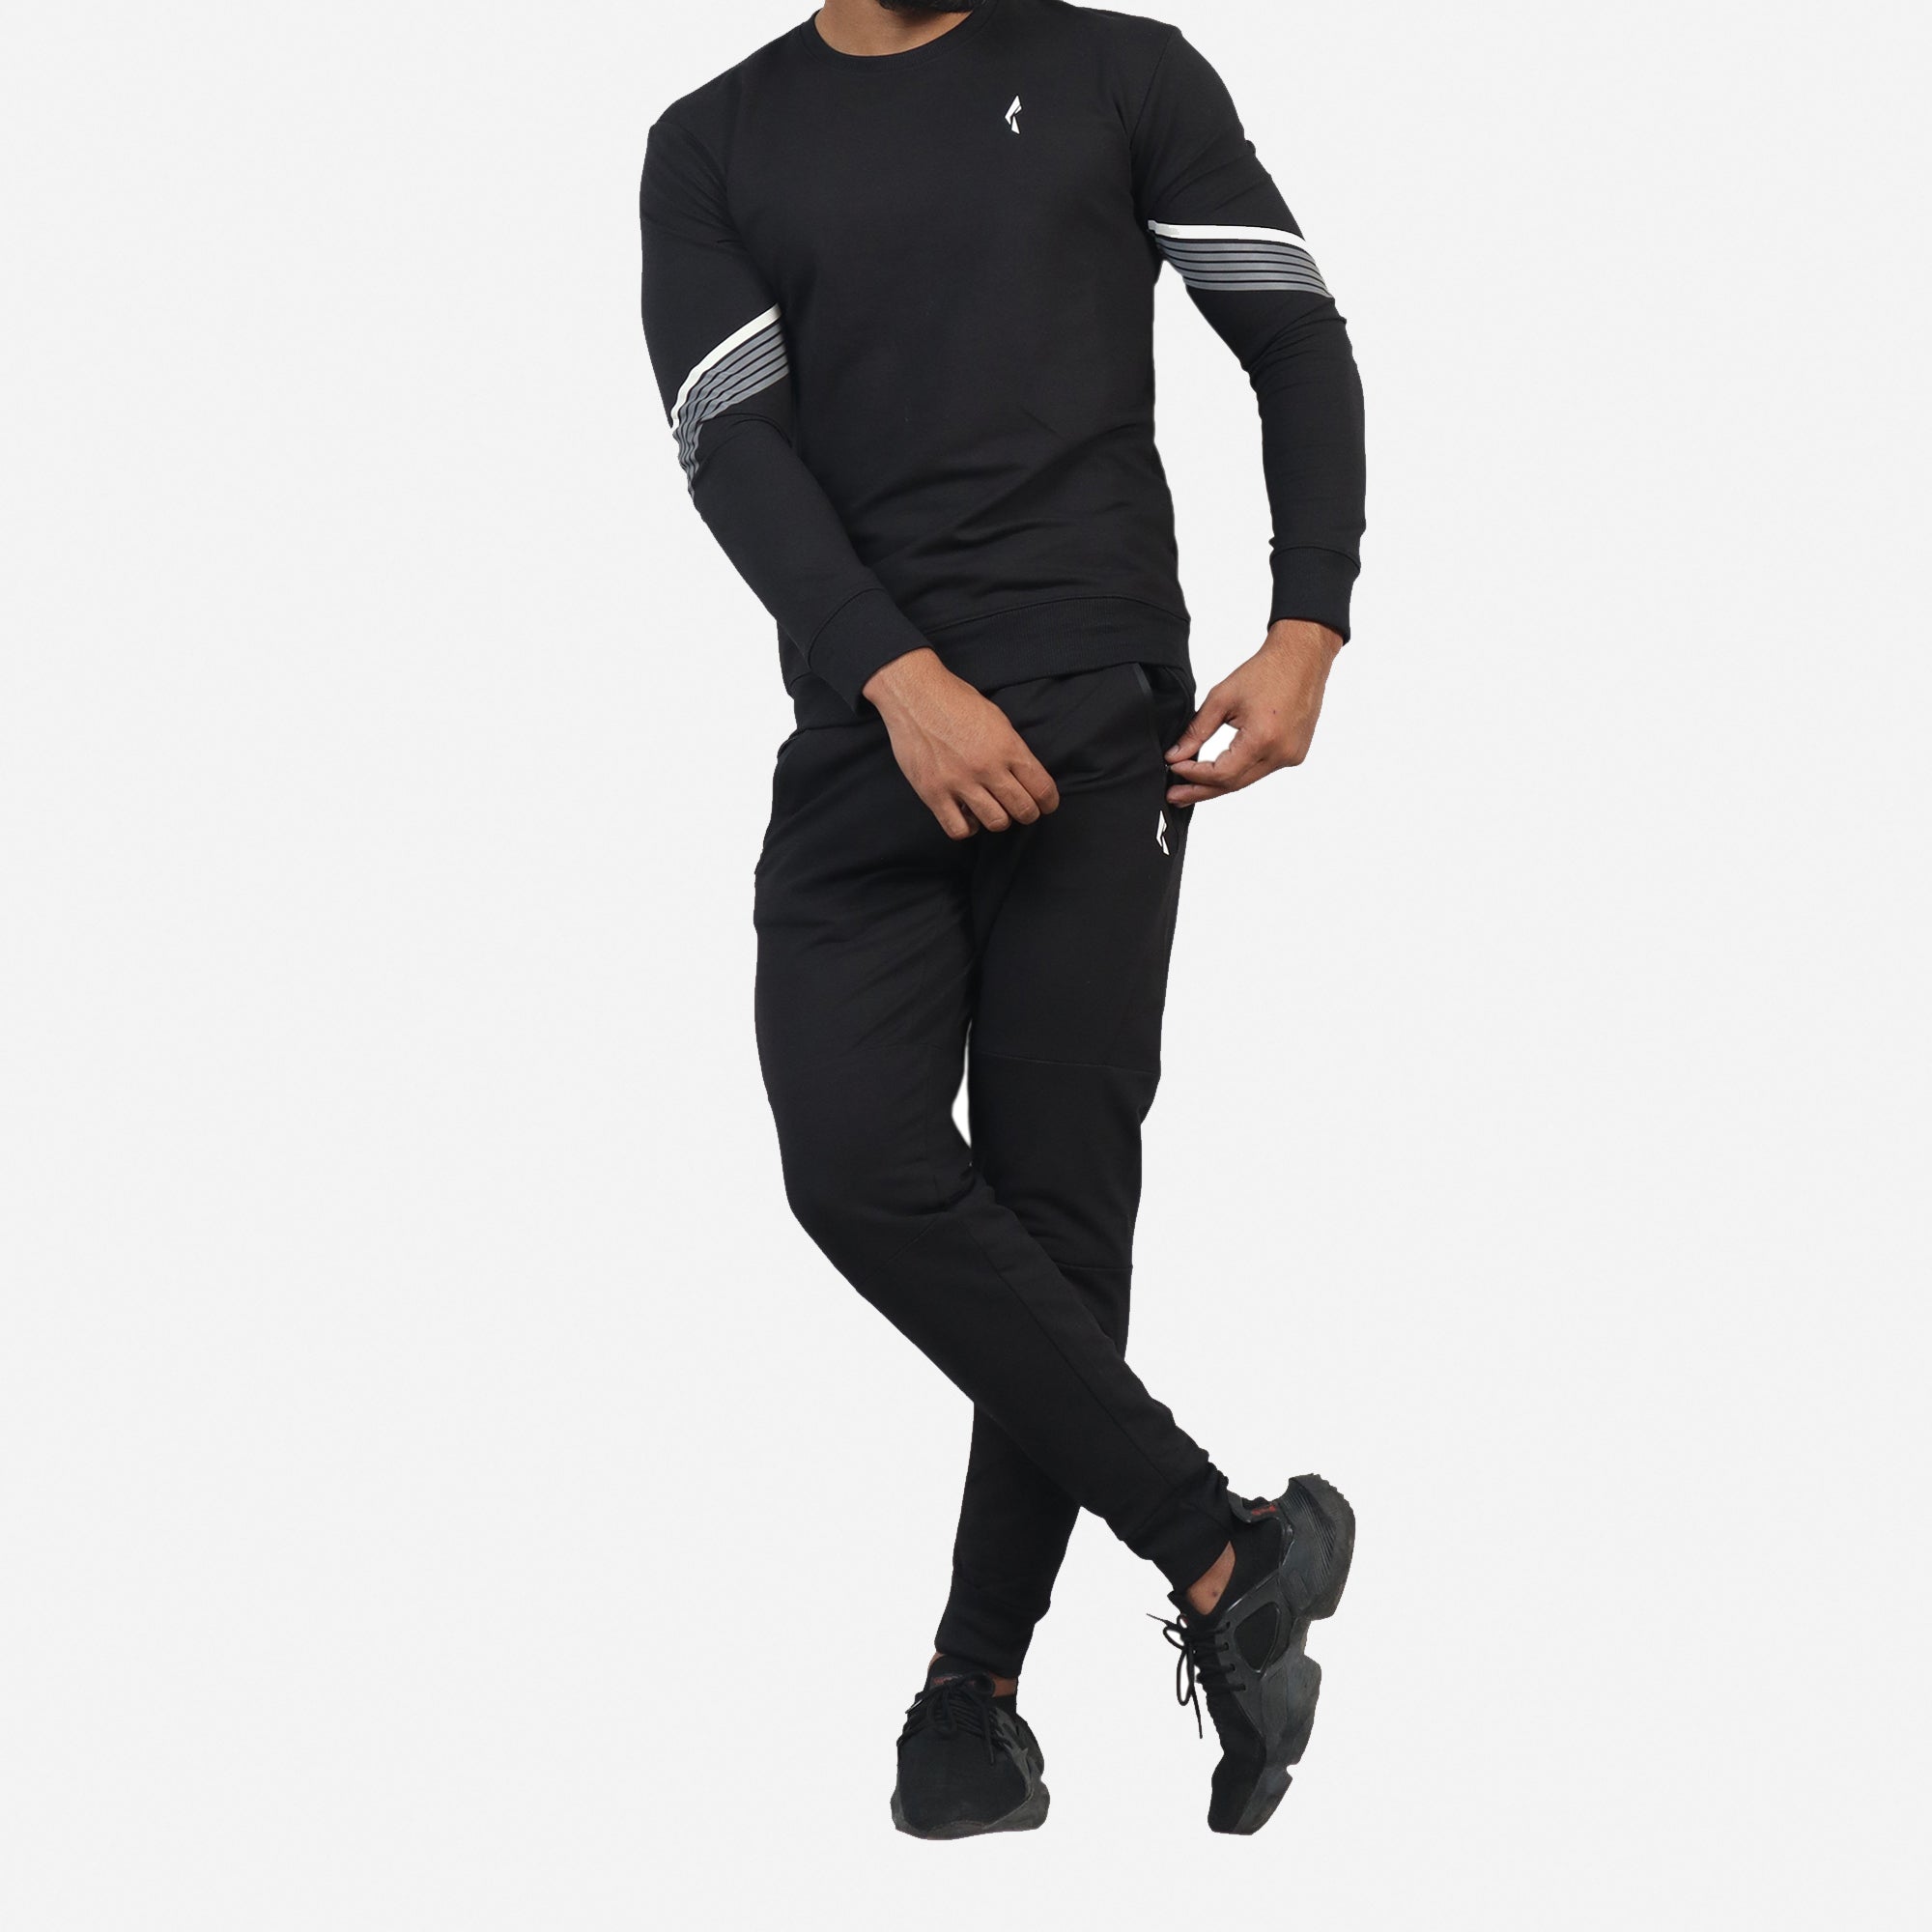 French Terry Tracksuit 2 Piece Sweatsuit Set Athletic Suit - Black